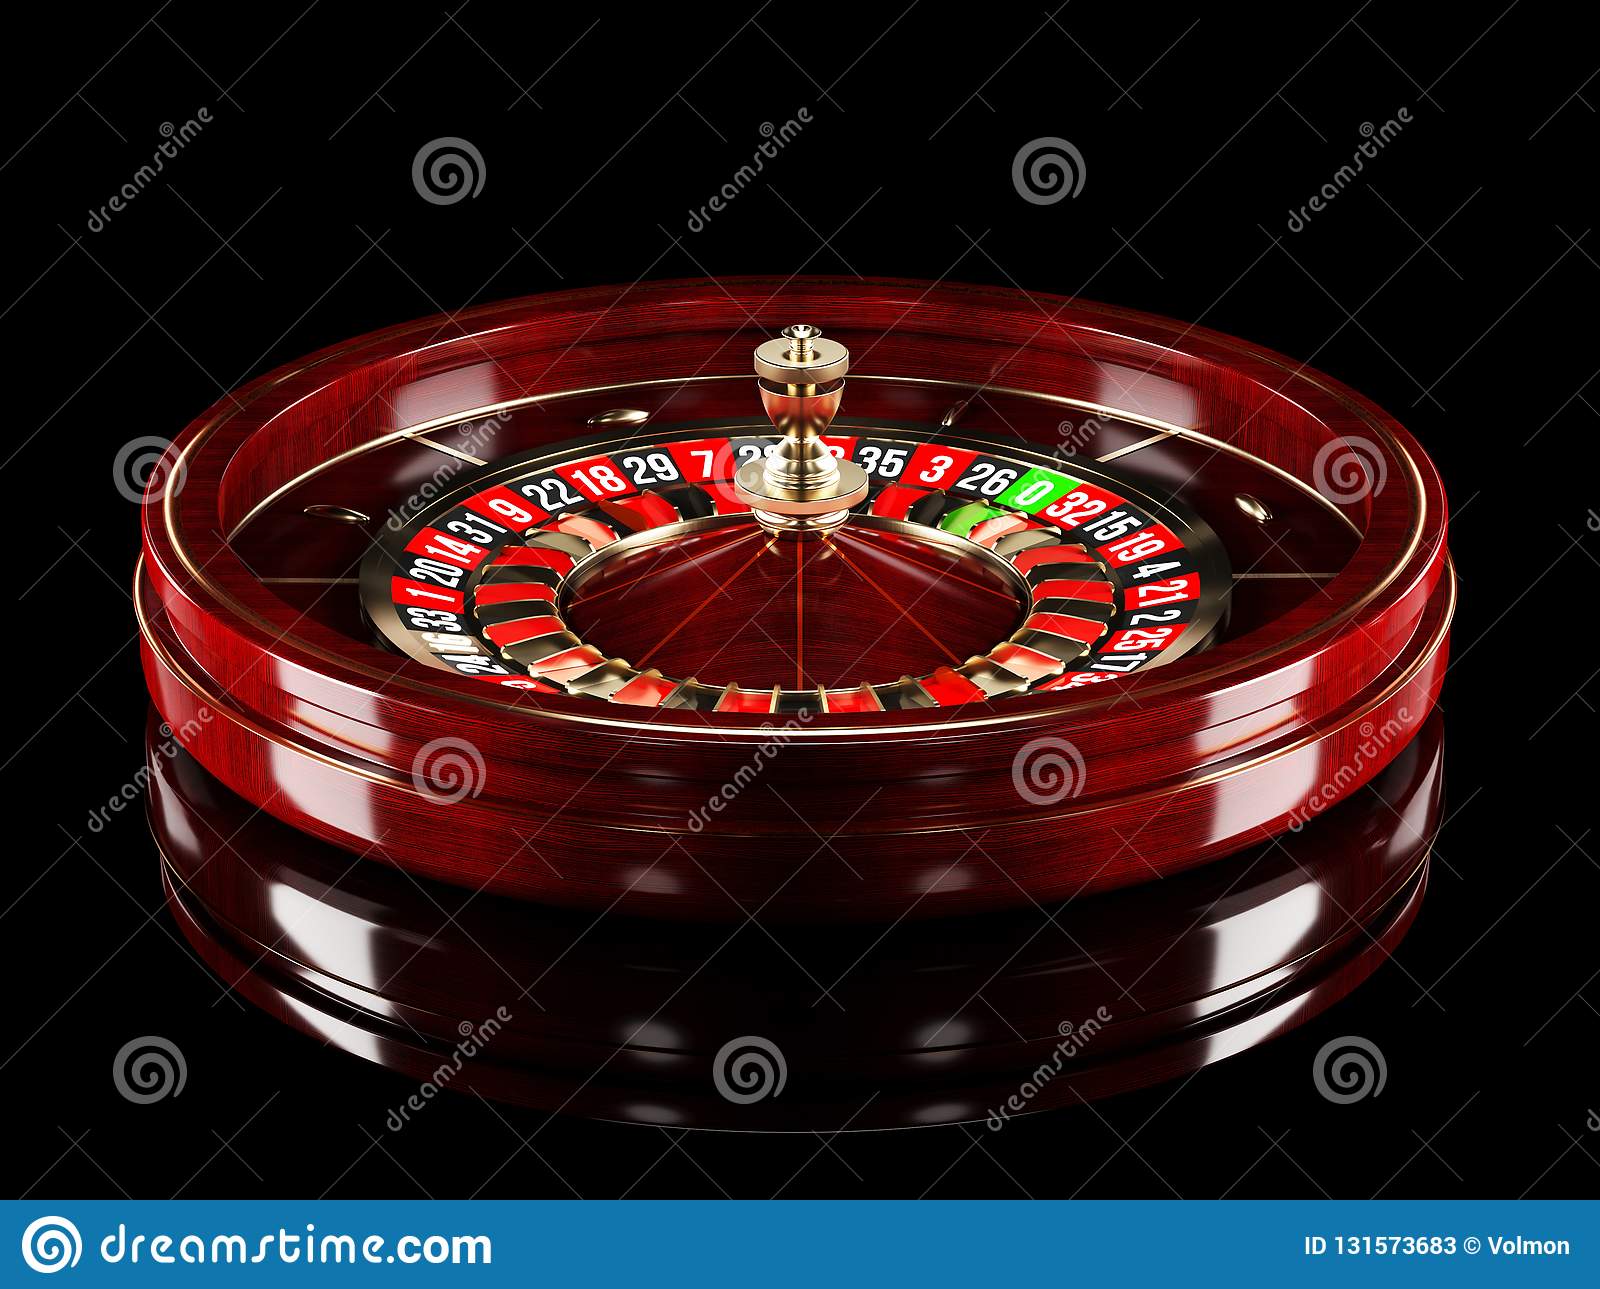 Casinos online roleta